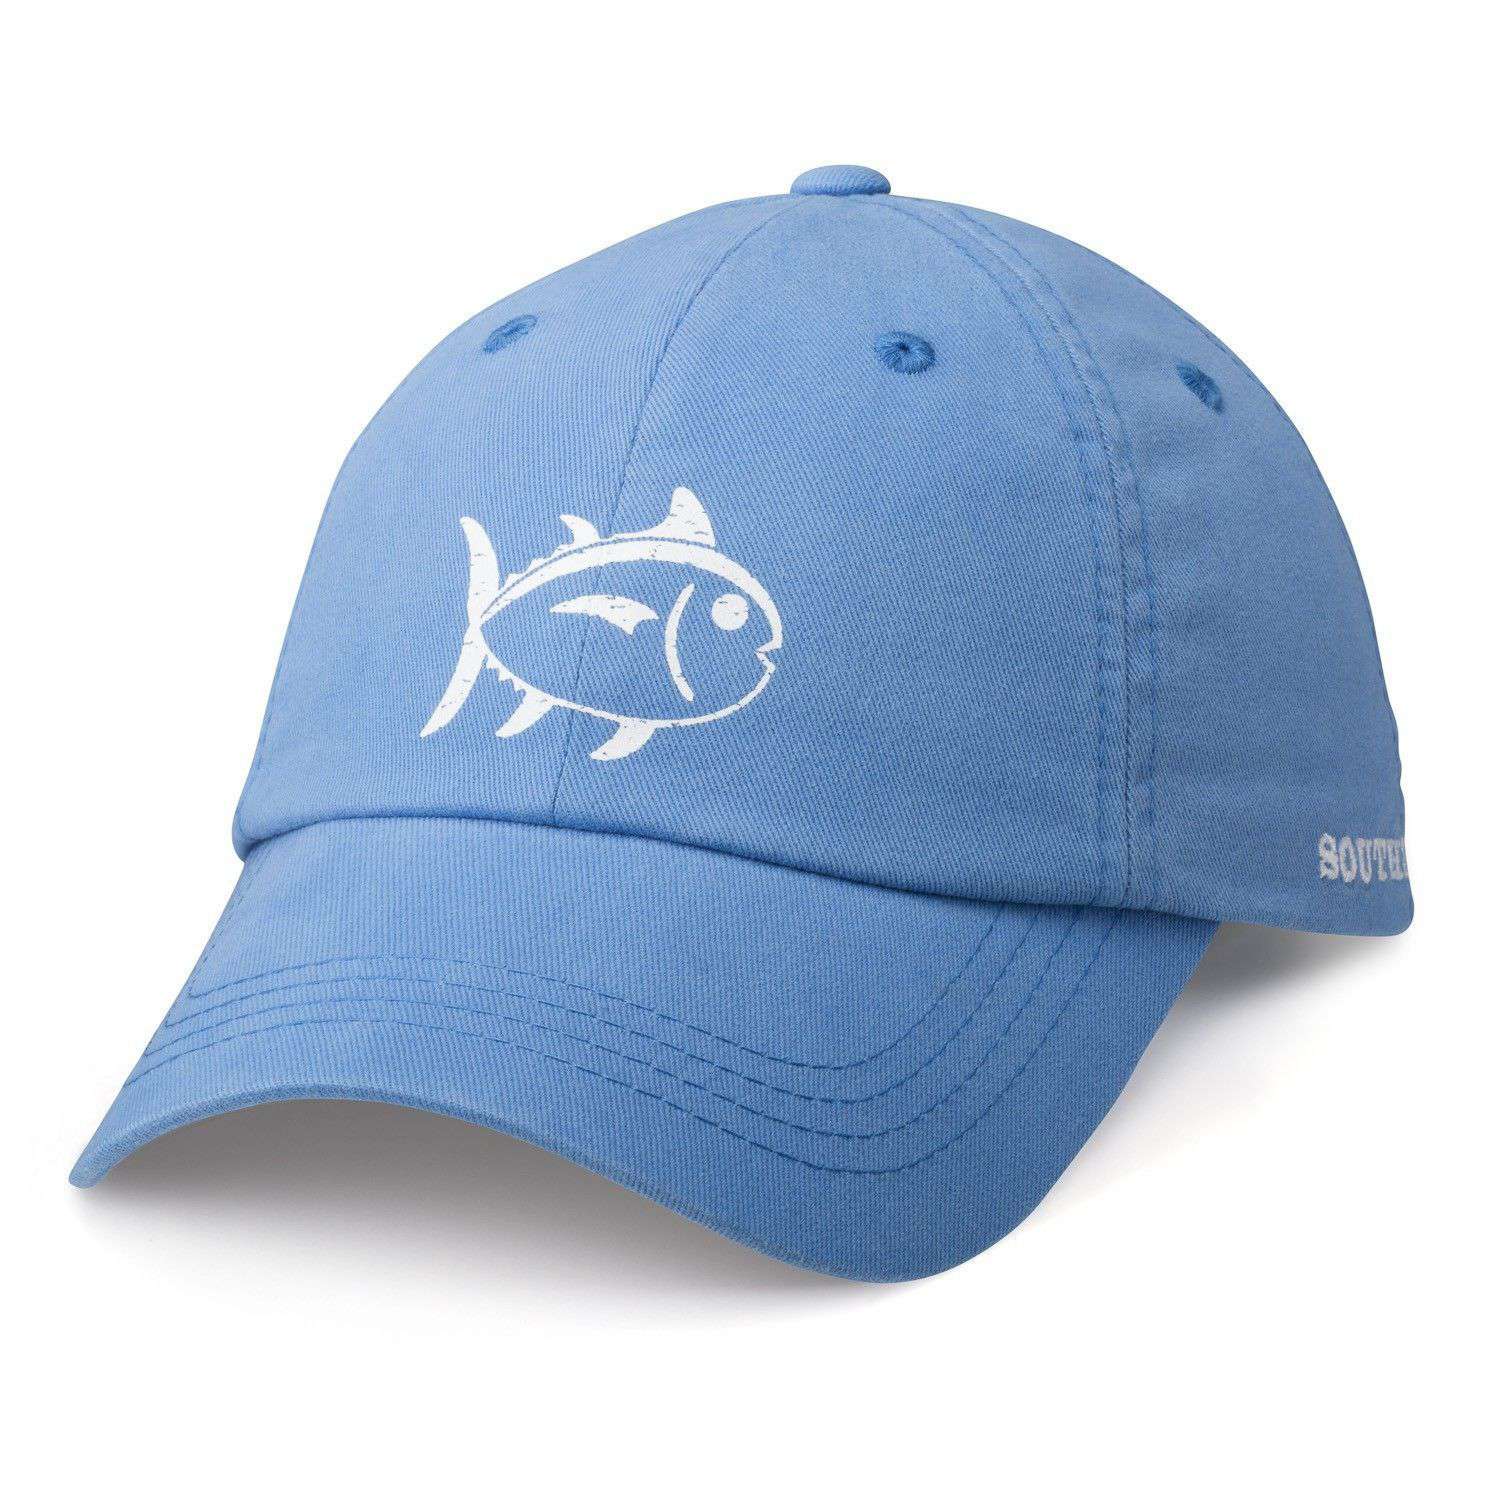 Printed Skipjack Hat in Blue by Southern Tide - Country Club Prep